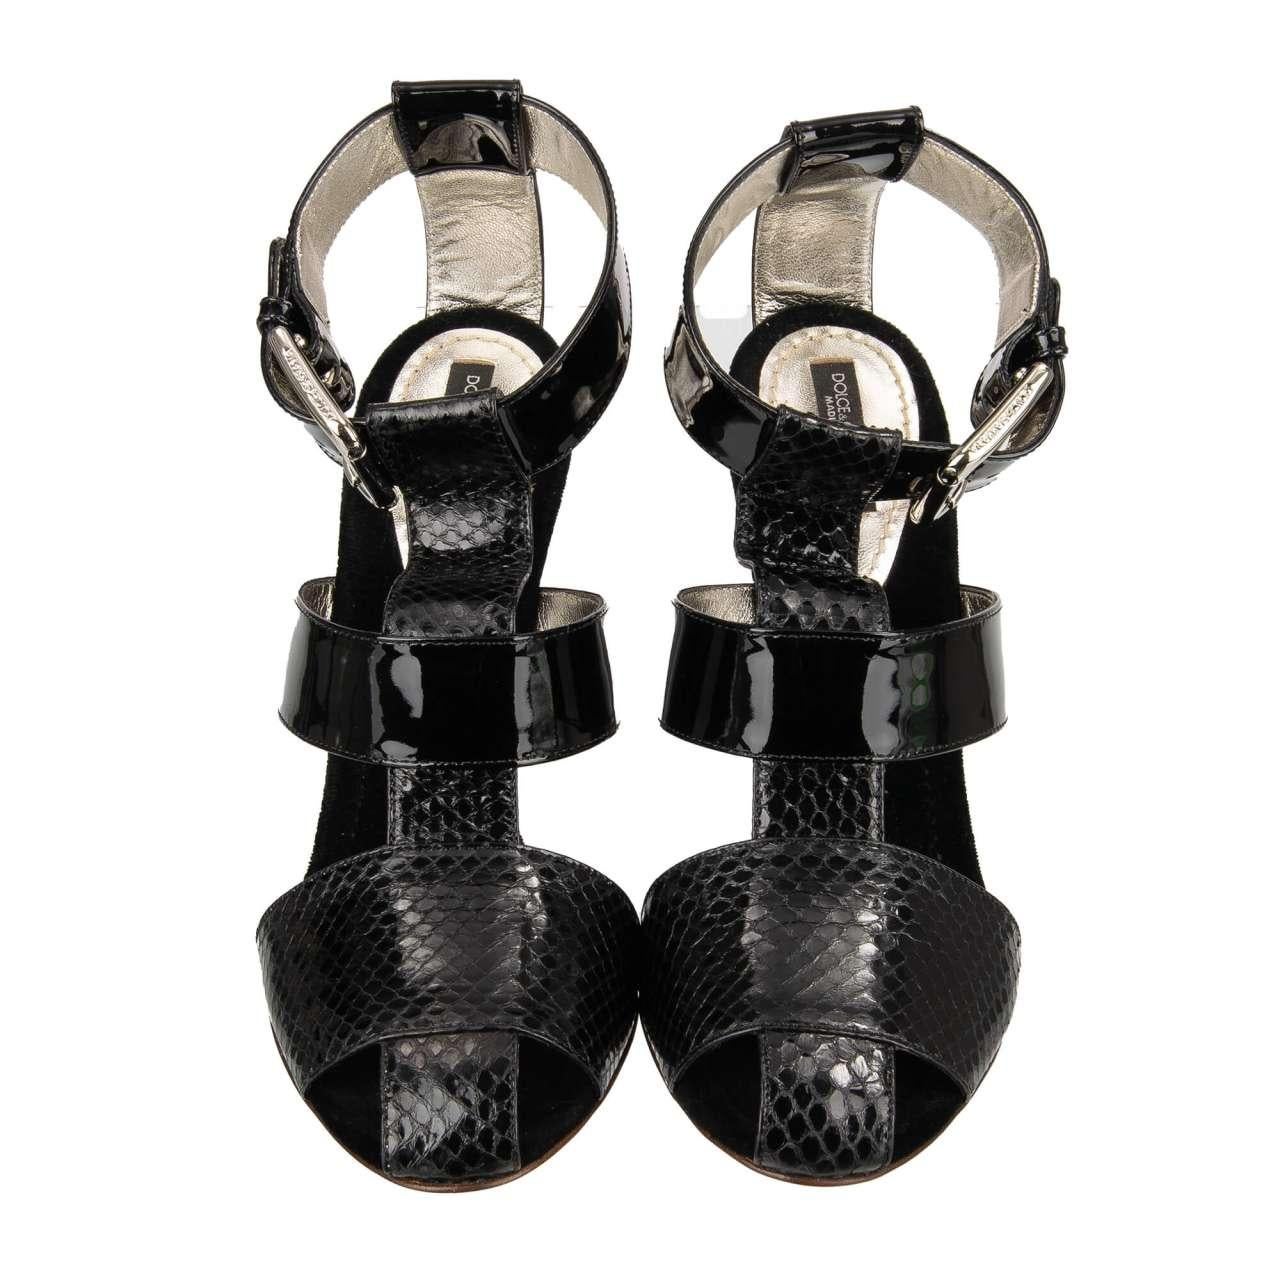 Dolce & Gabbana - Snake Patent Leather Straps Sandals Heels Black 39 9 In Excellent Condition For Sale In Erkrath, DE